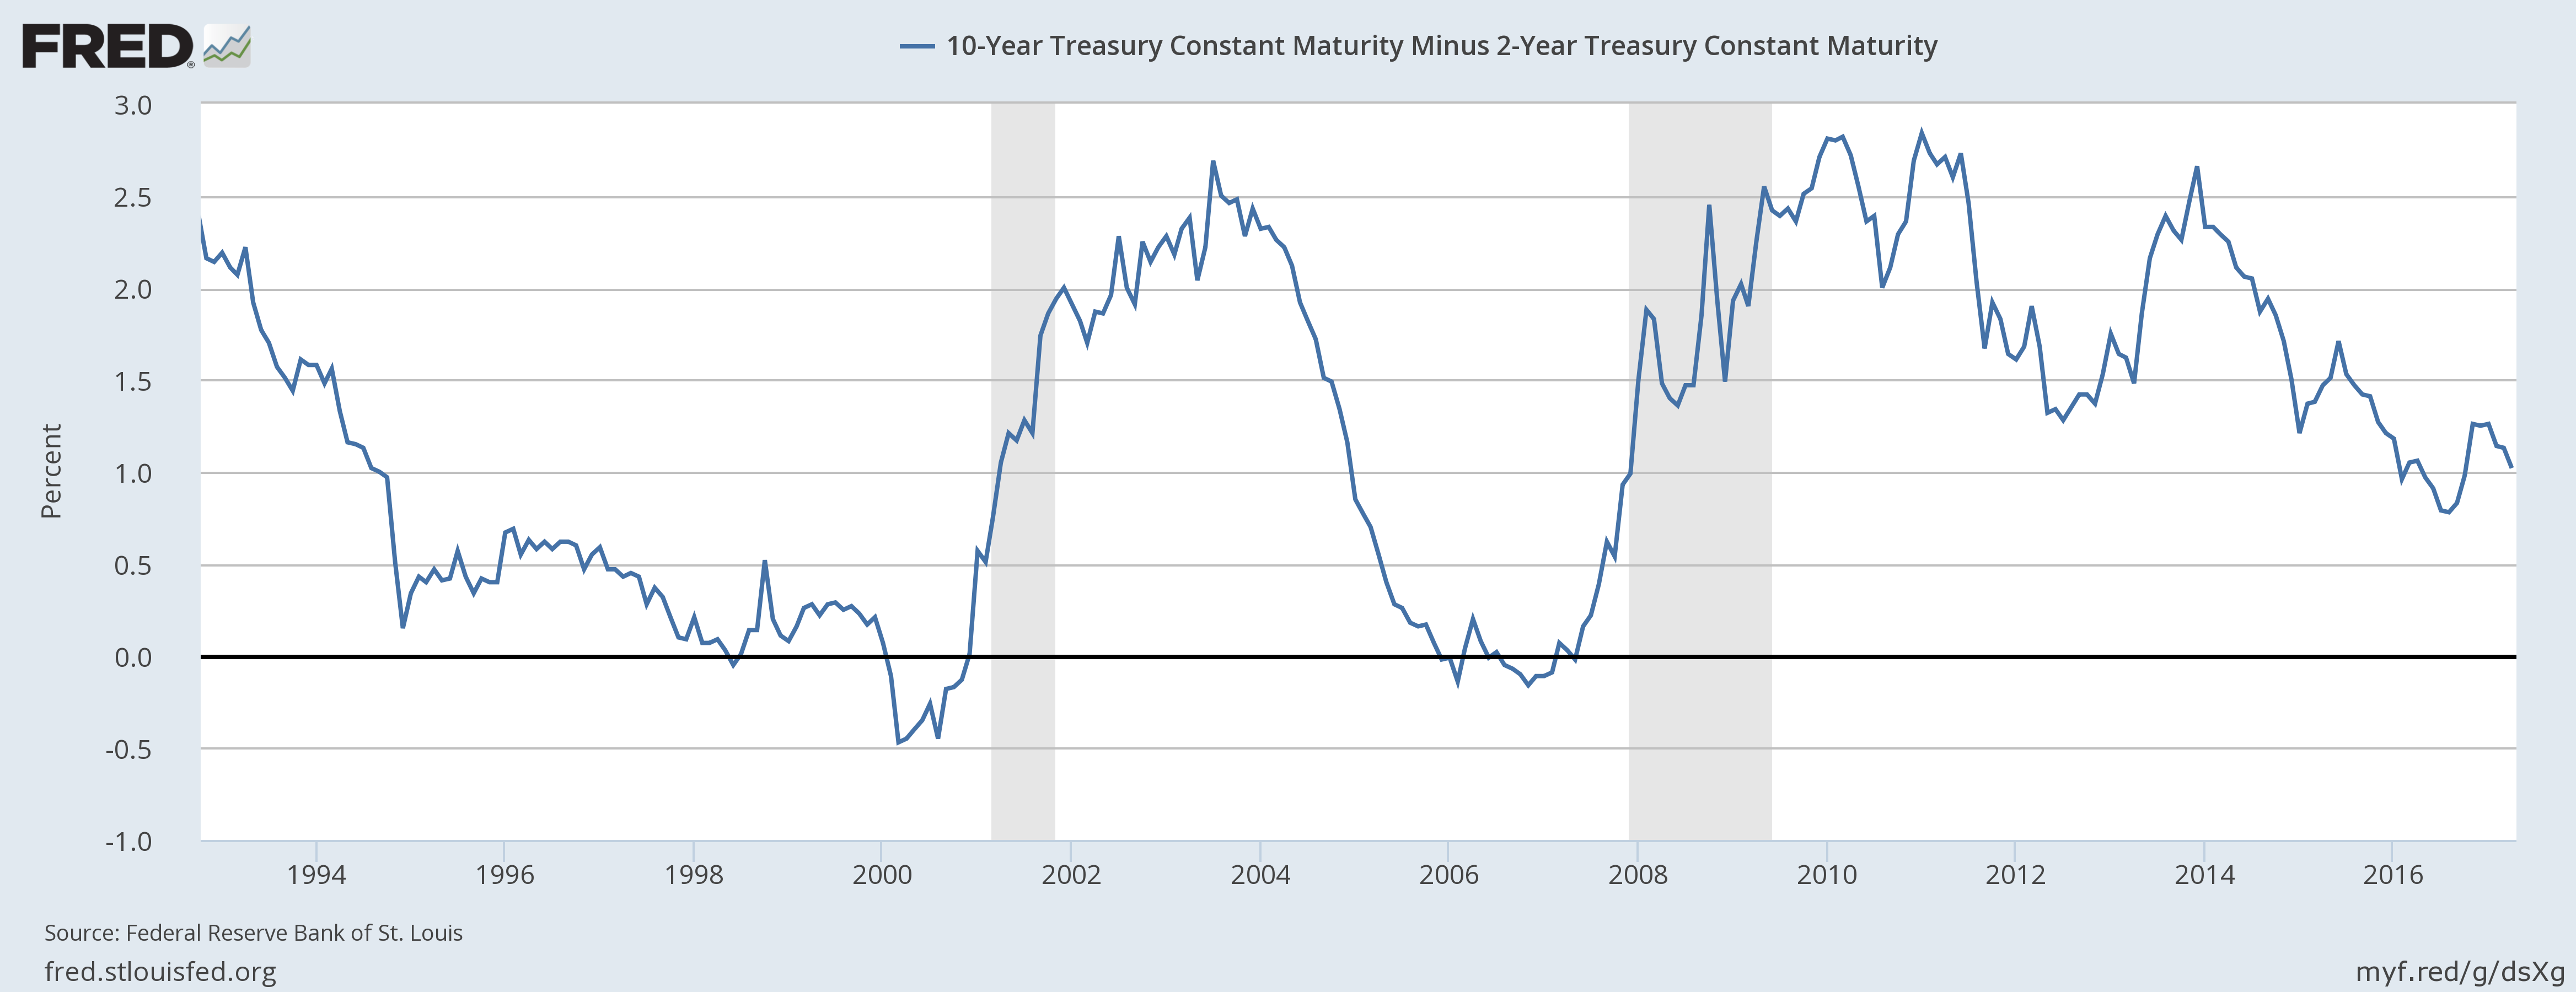 10 Year Treasury Constant Maturity Minus 2 Year Constant Maturity